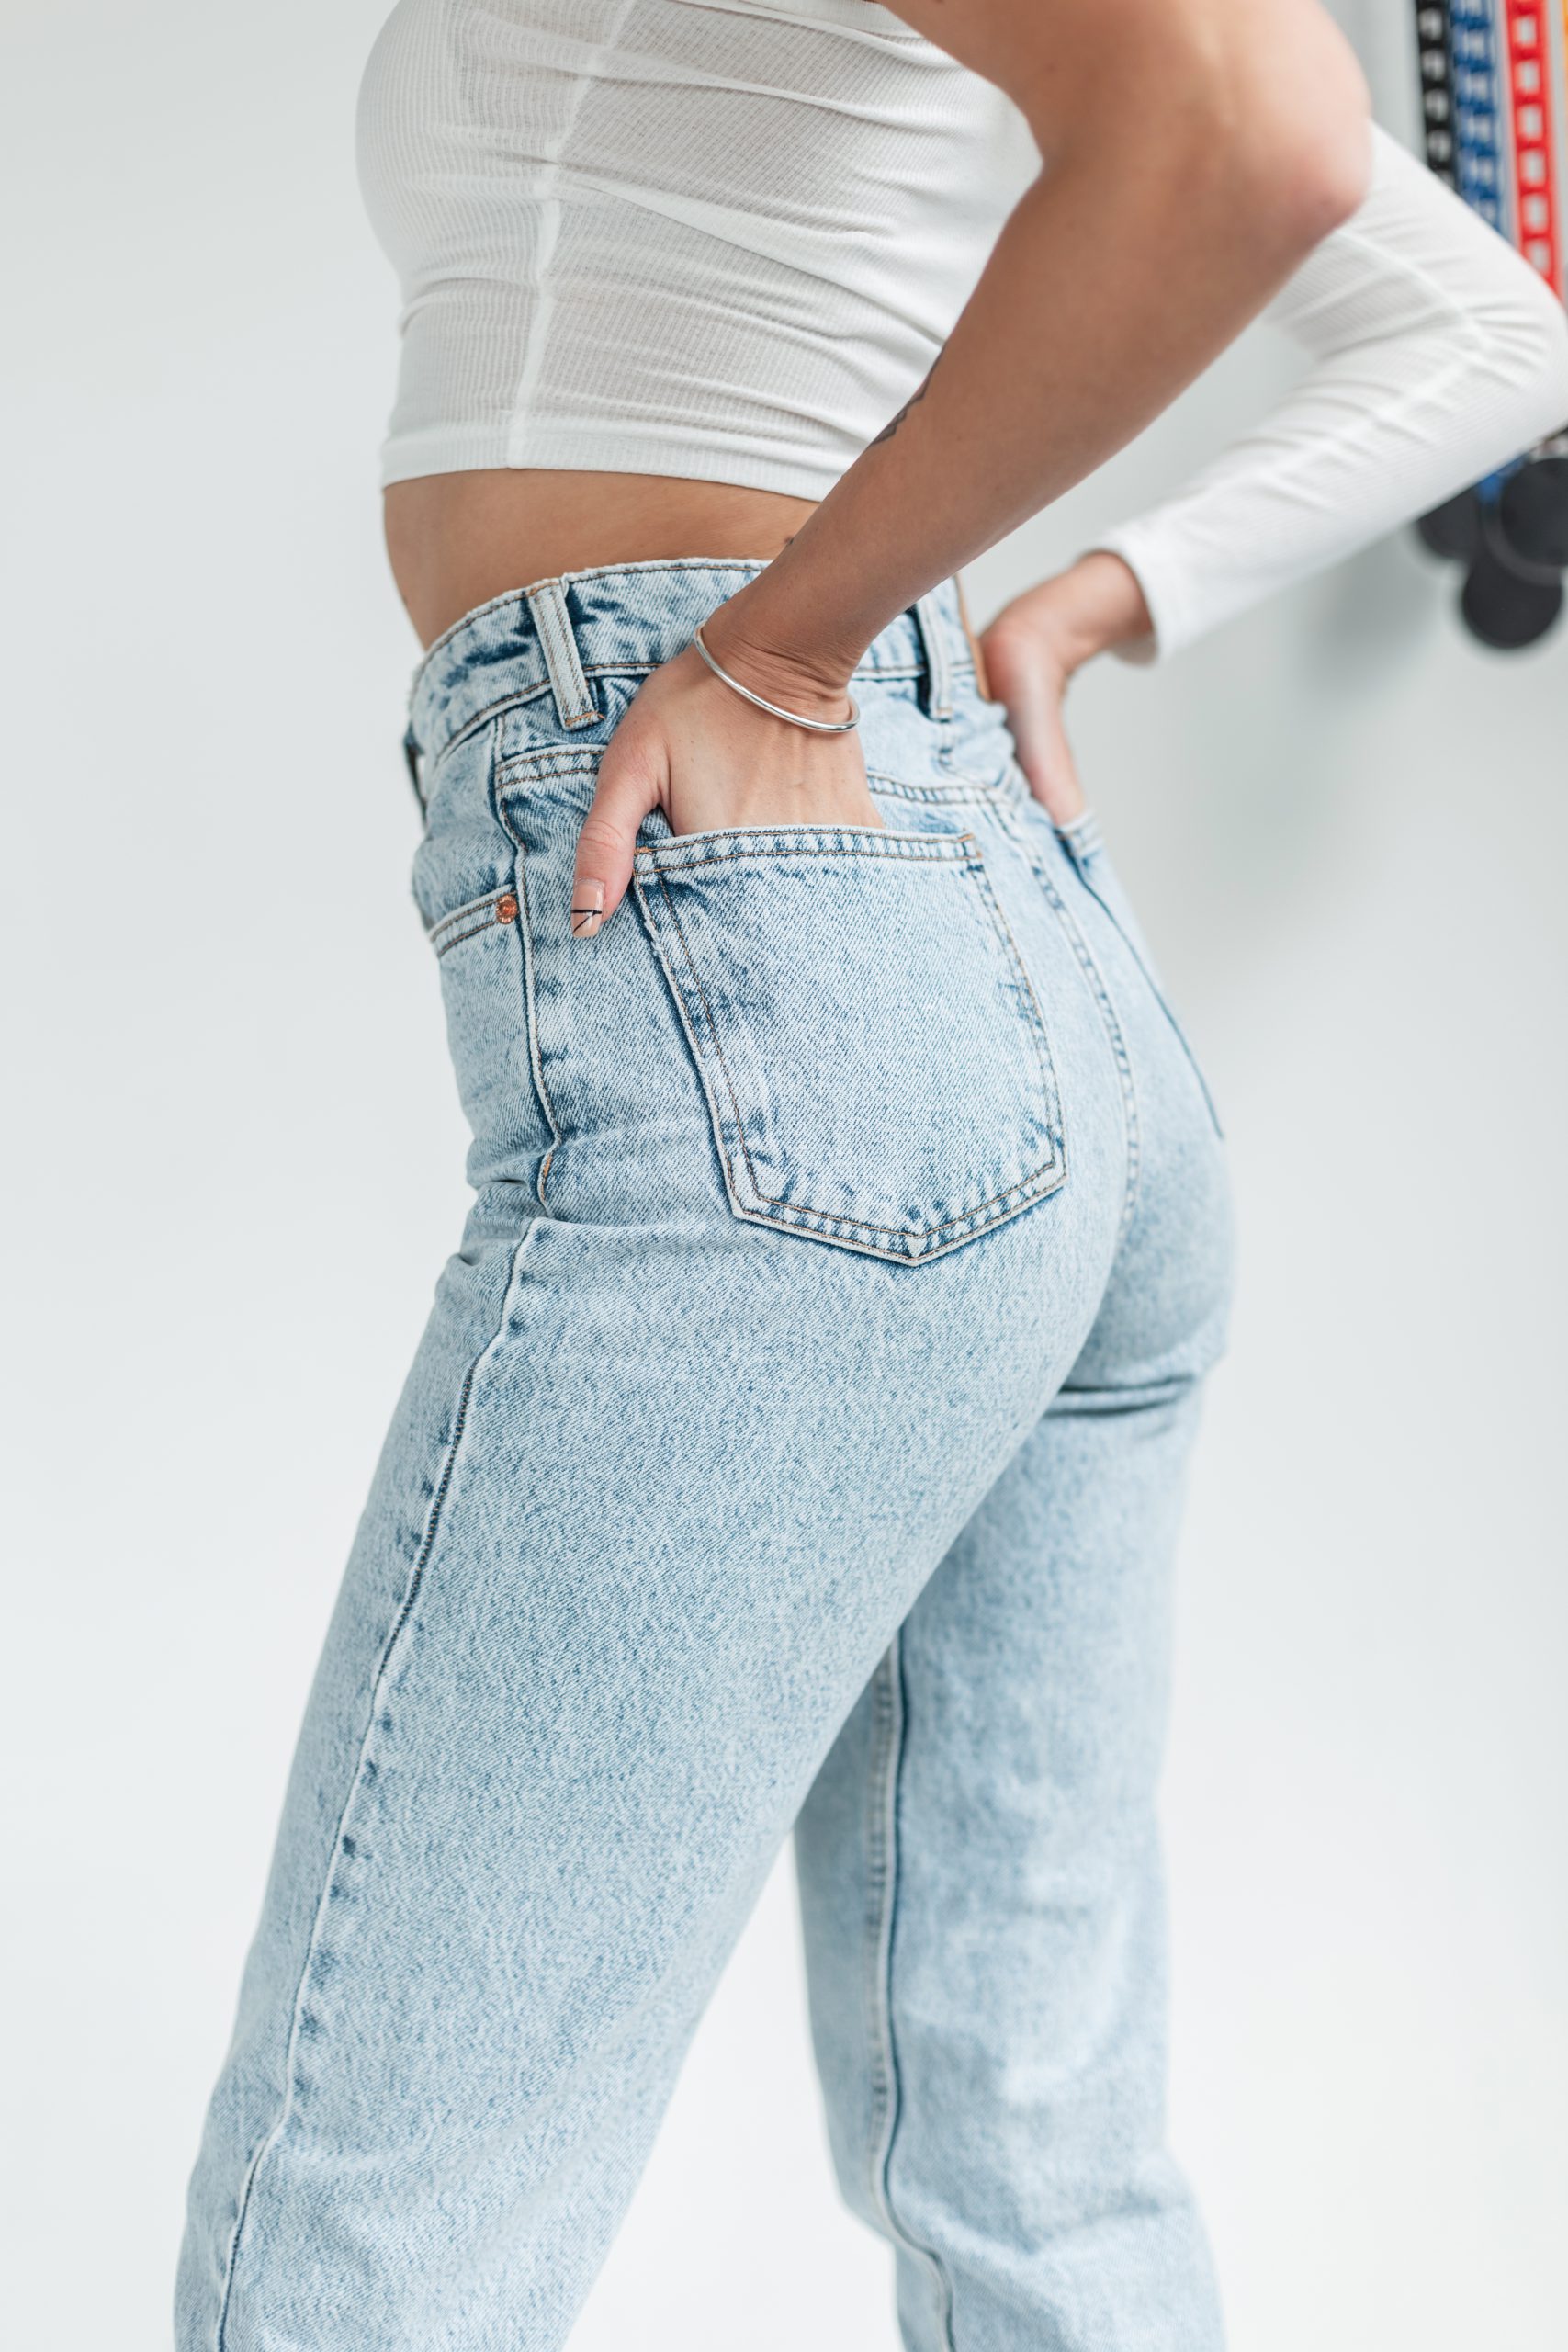 5 Tipe Jeans Wanita yang Buat Kamu Tampil Stylish